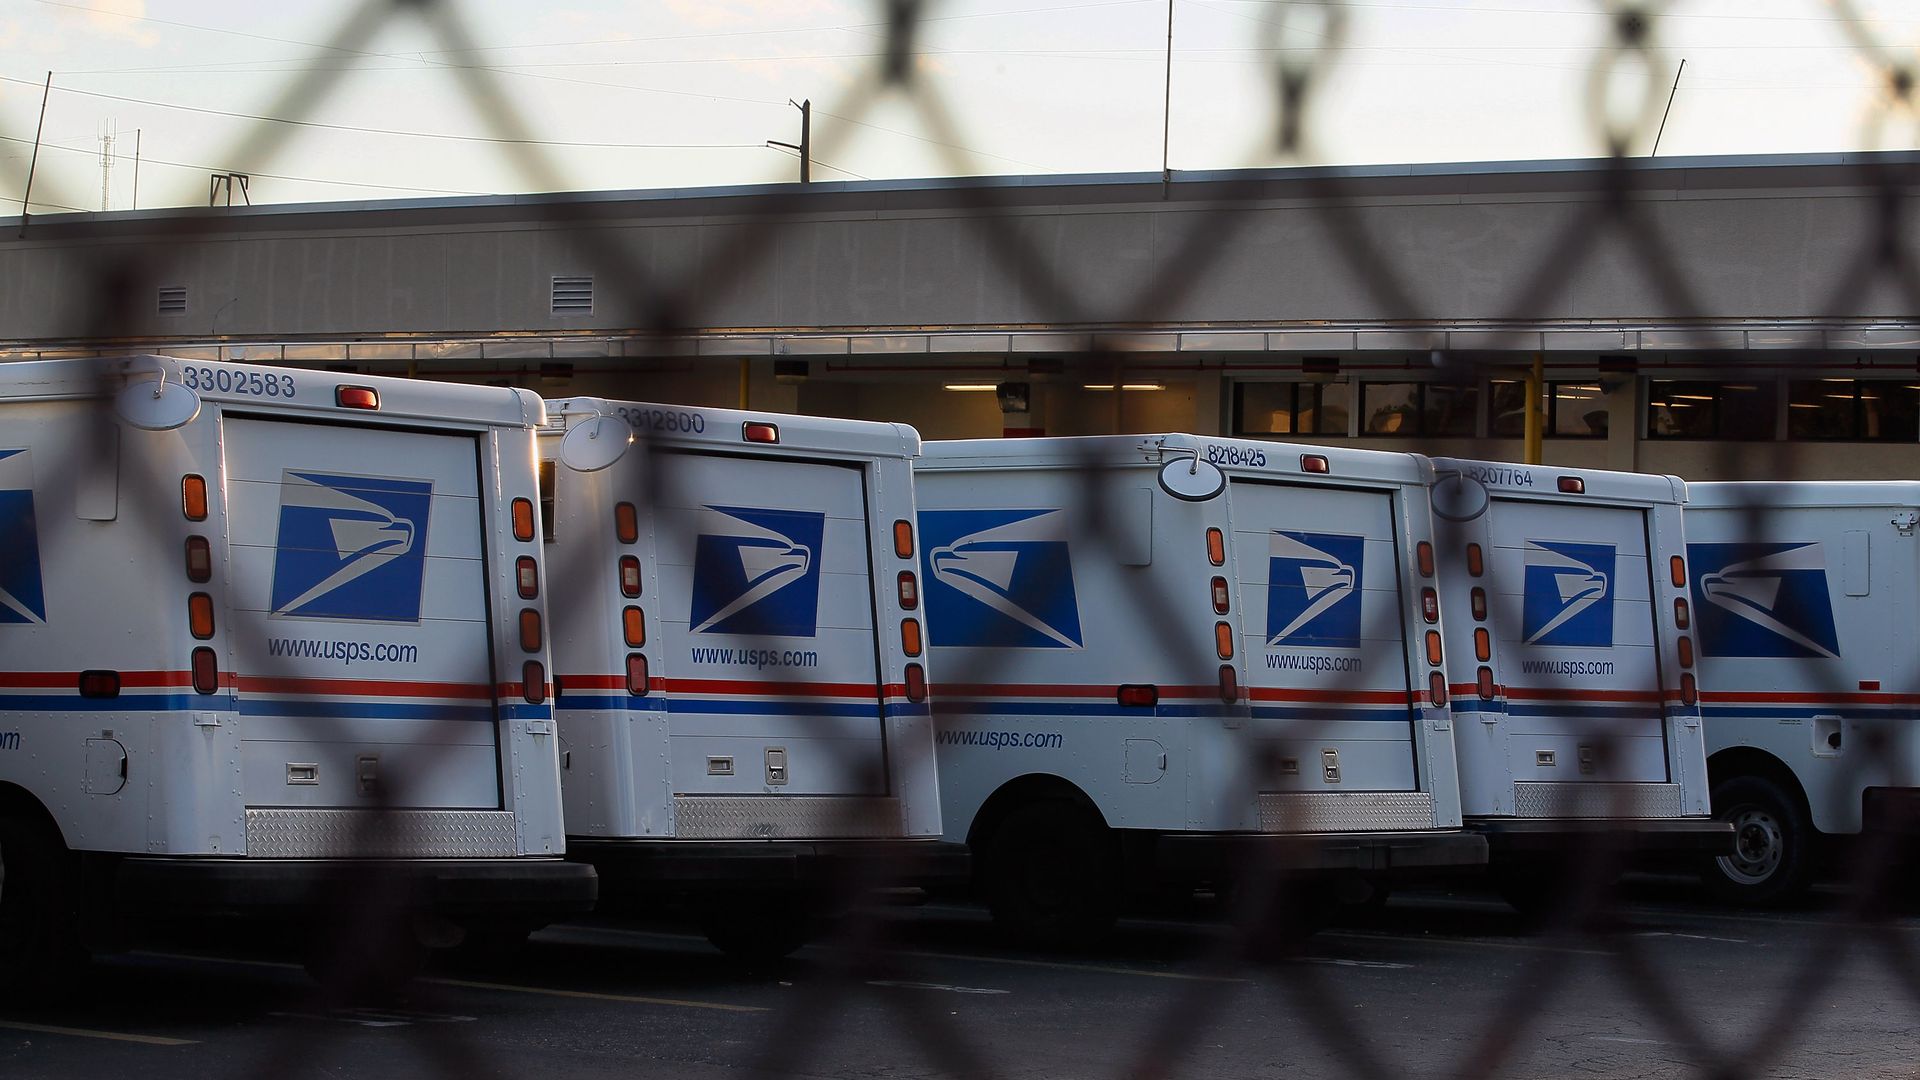 Postal service vehicles